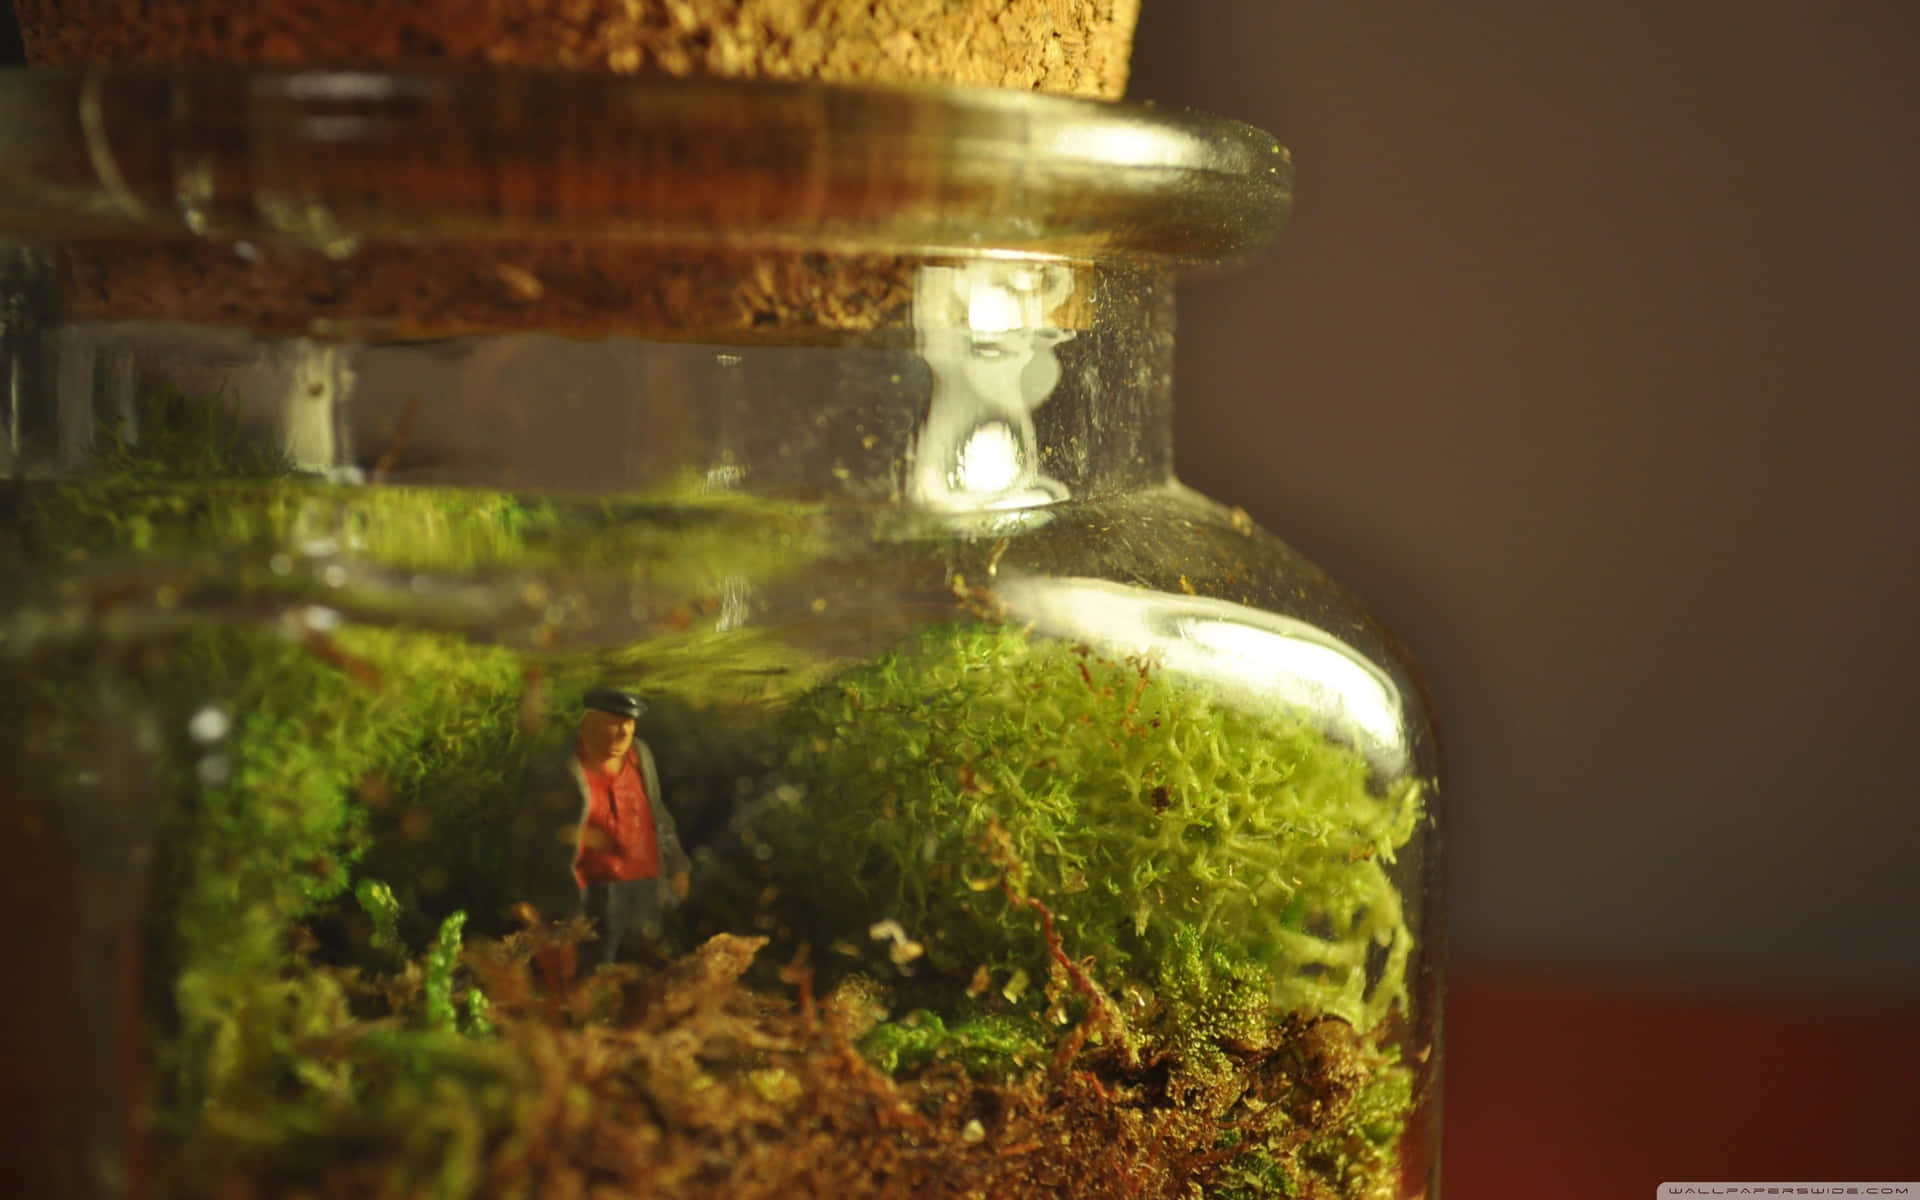 A Jar With Moss And A Small Figurine Inside